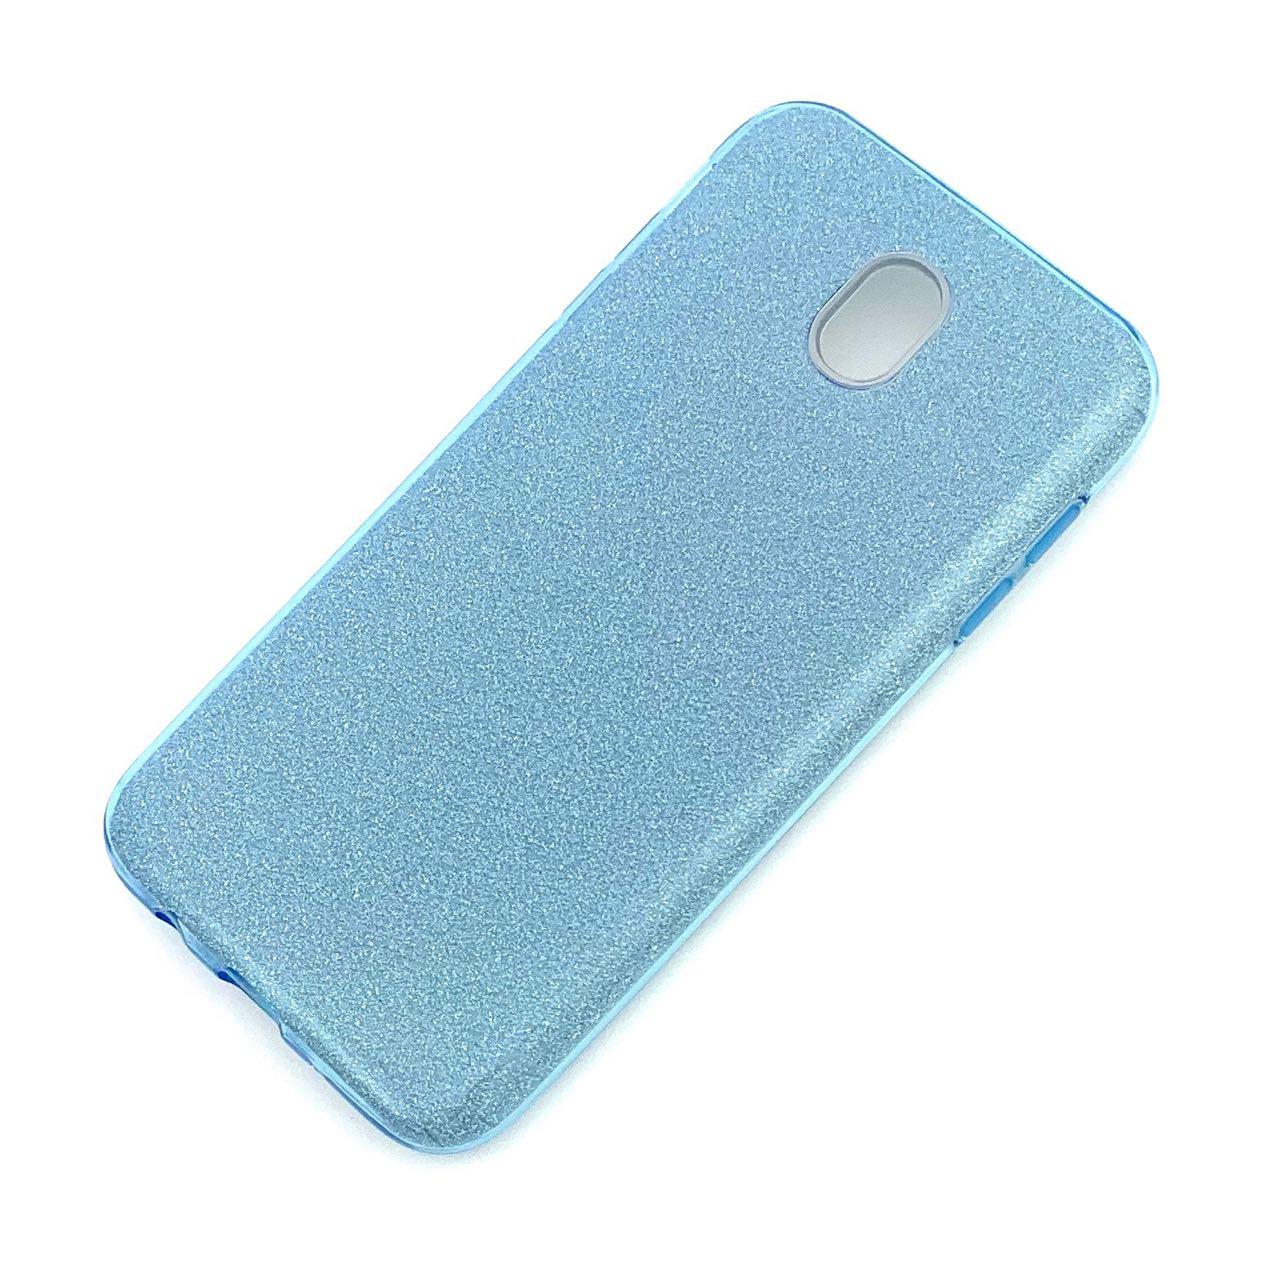 Чехол накладка Shine для SAMSUNG Galaxy J7 2017 (SM-J730), силикон, блестки, цвет голубой.